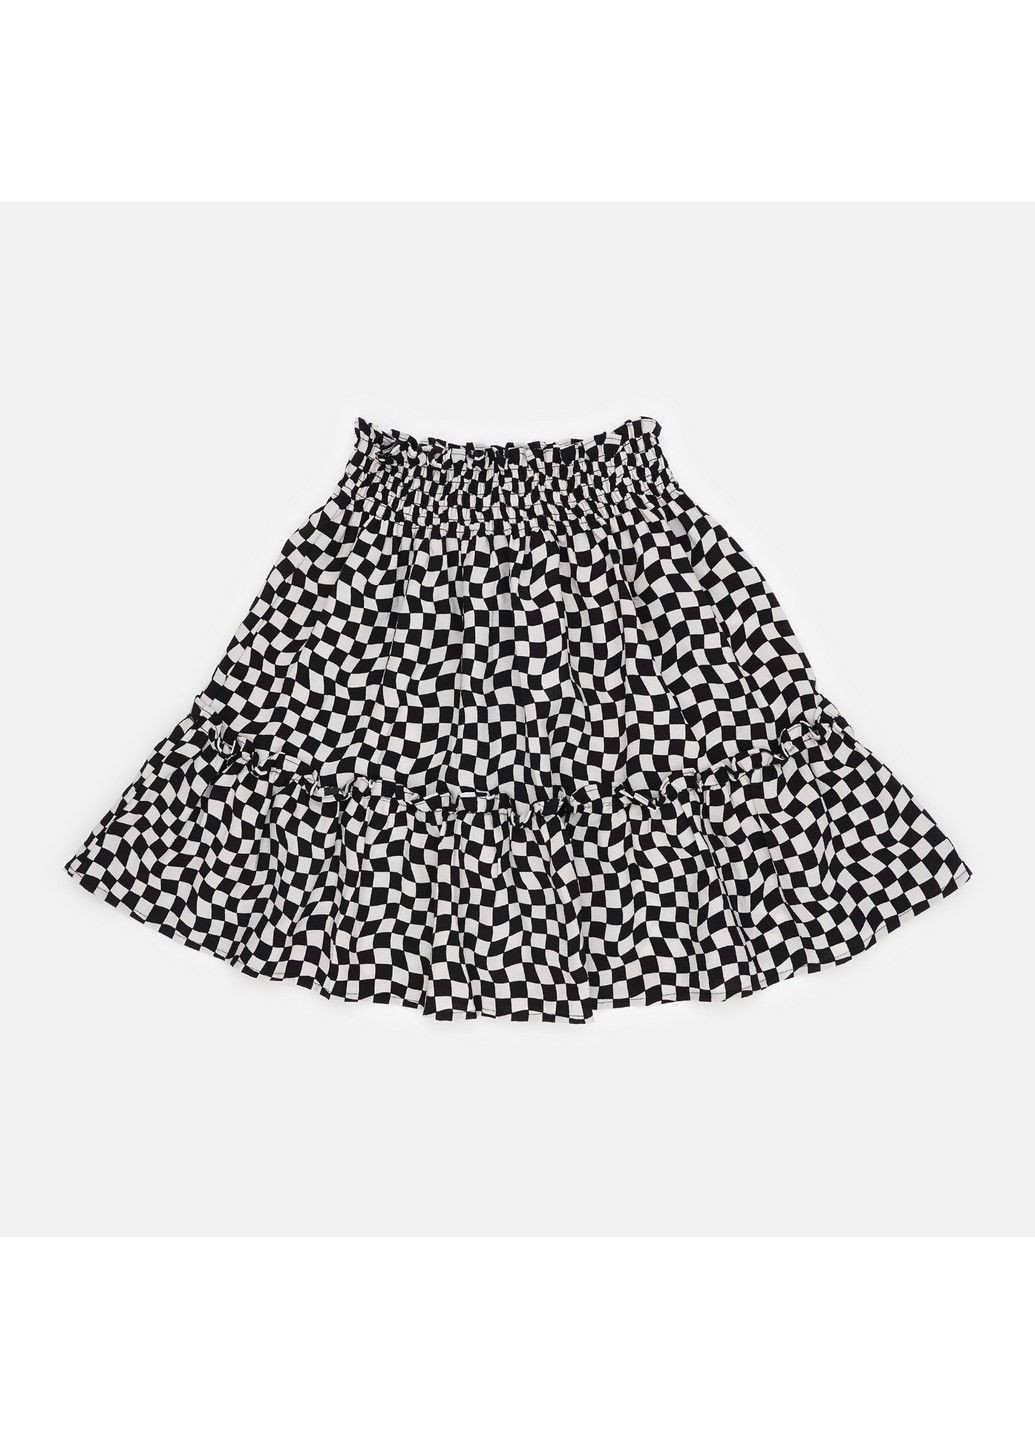 Черно-белая с геометрическим узором юбка H&M